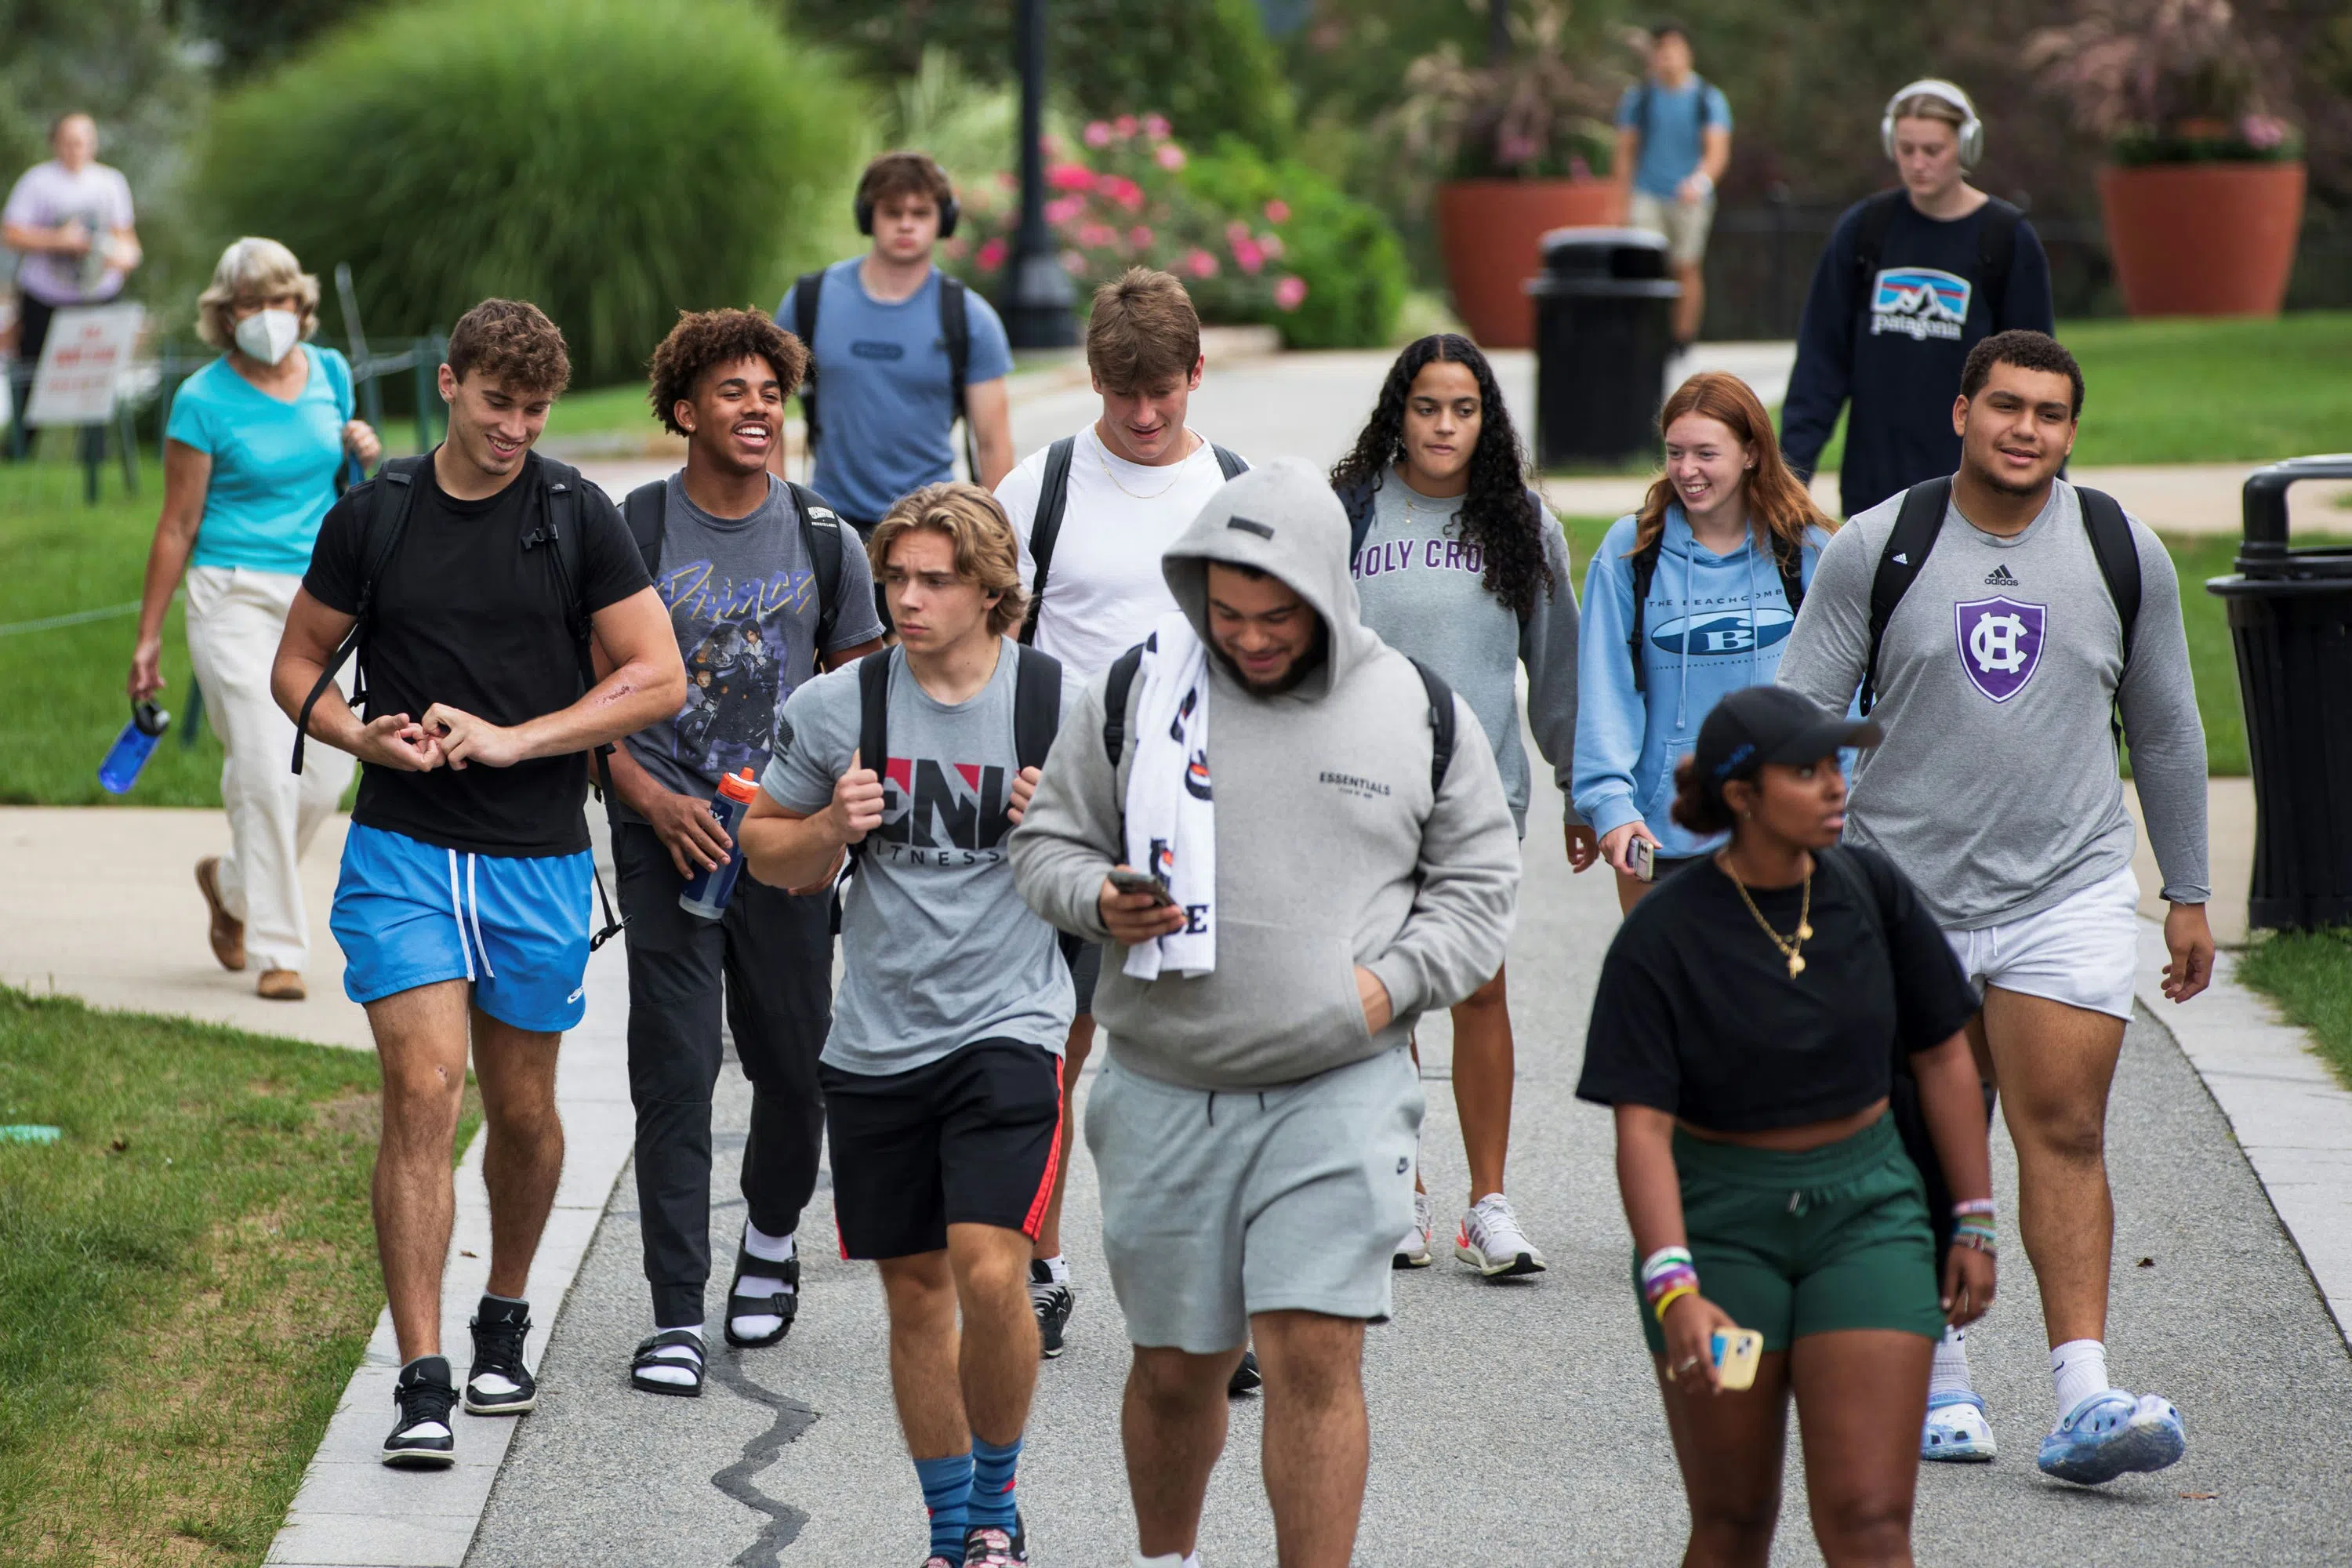 Students walking on Easy Street 